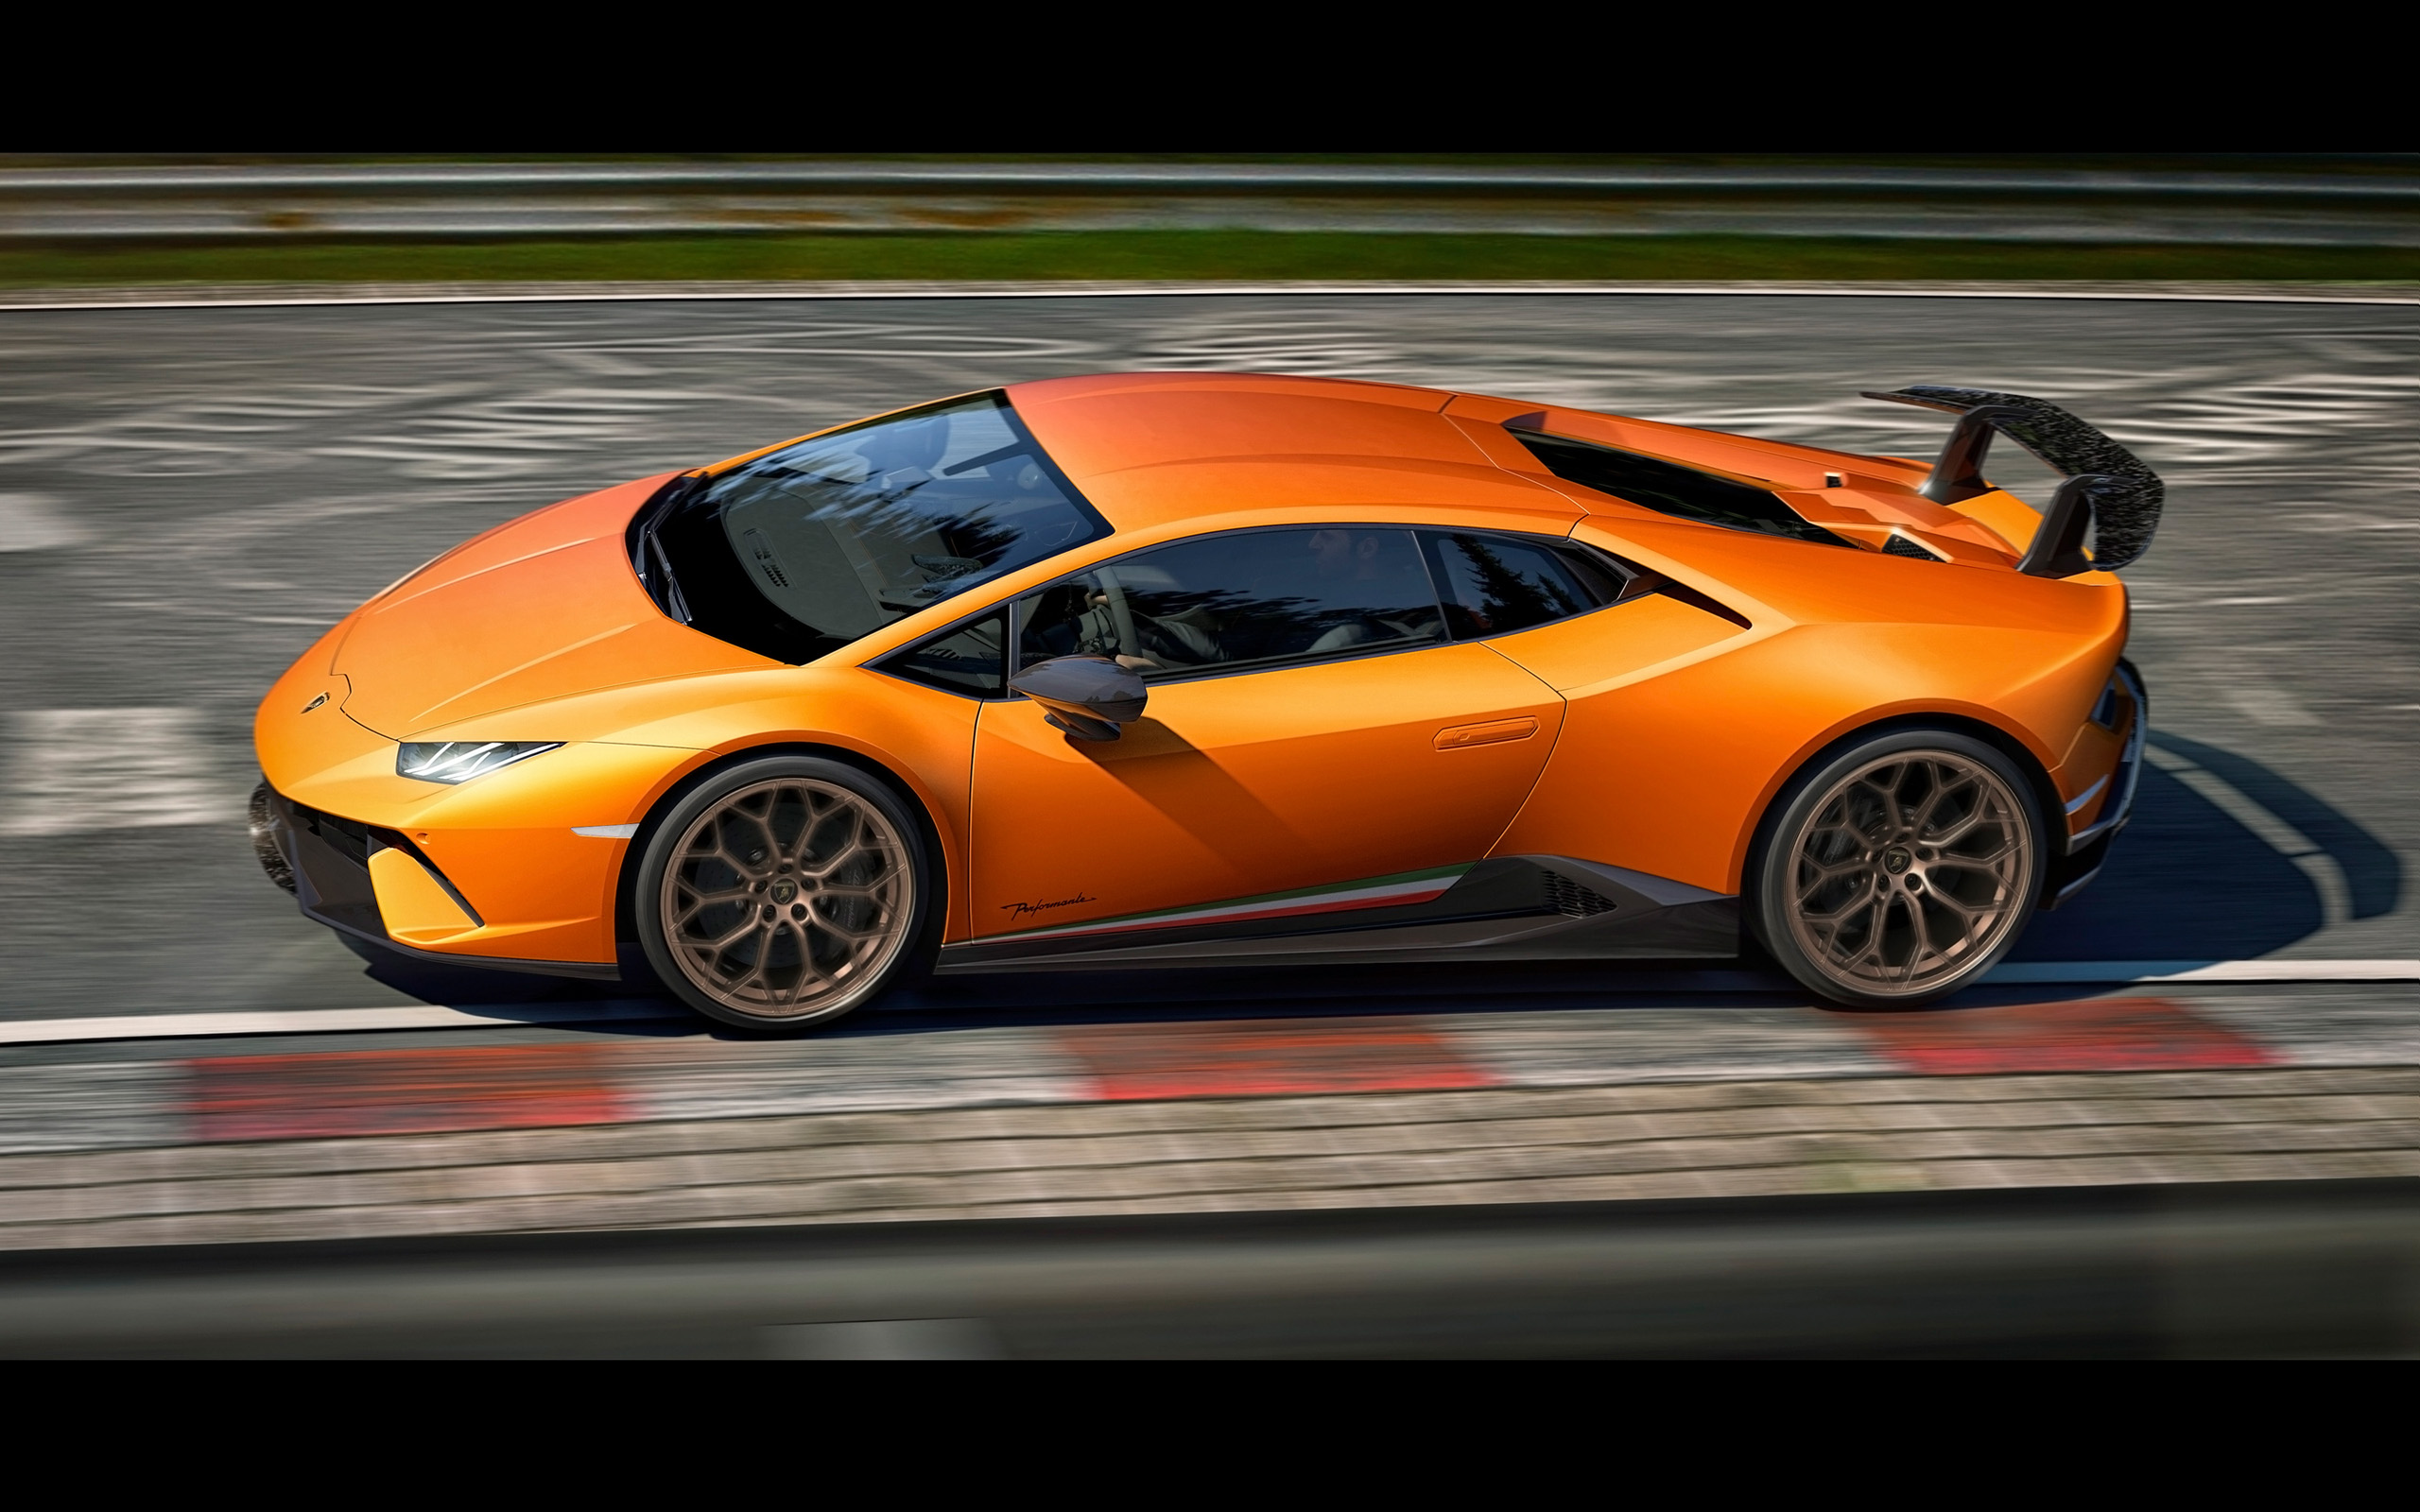 Baixe gratuitamente a imagem Lamborghini, Carro, Super Carro, Lamborghini Huracan Performante, Veículos, Lamborghini Huracán Performance na área de trabalho do seu PC